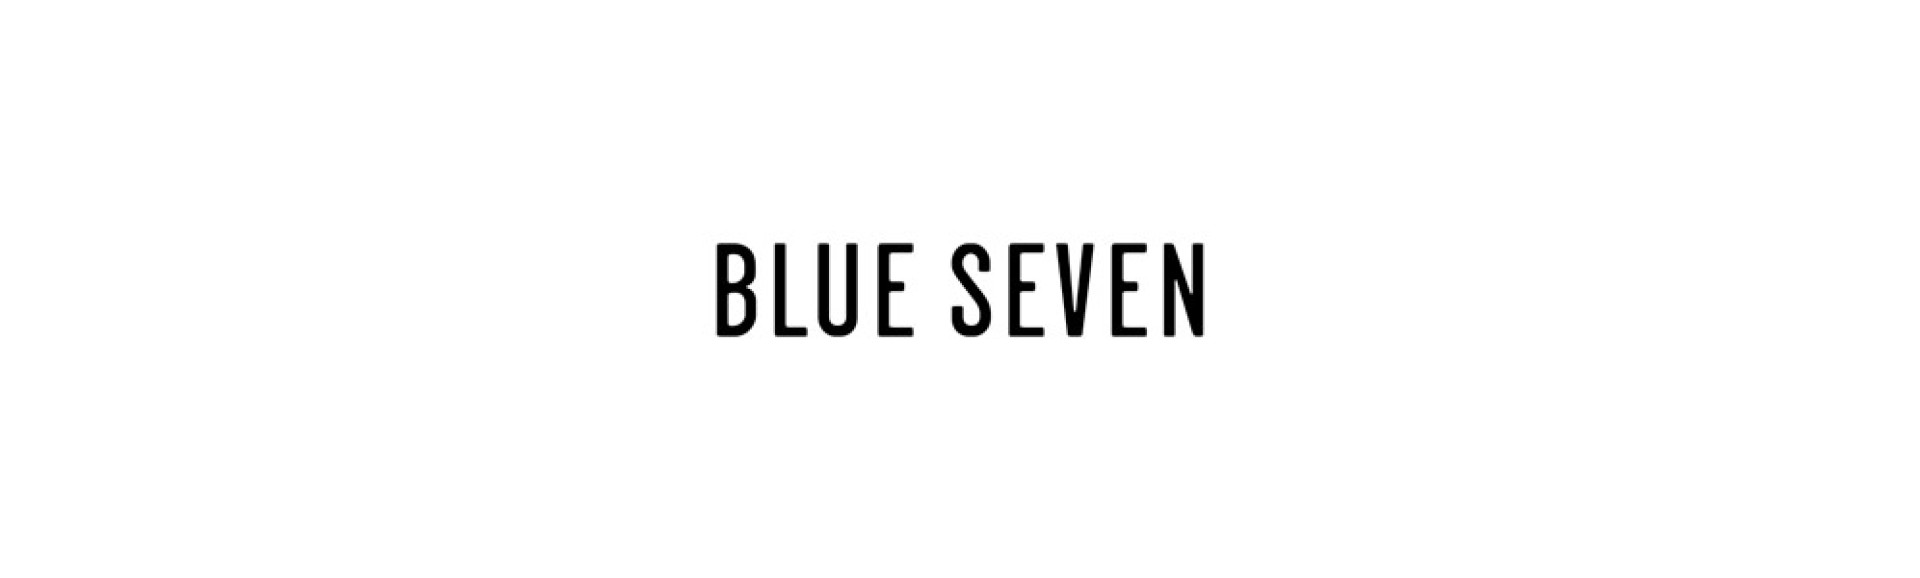 Blue seven